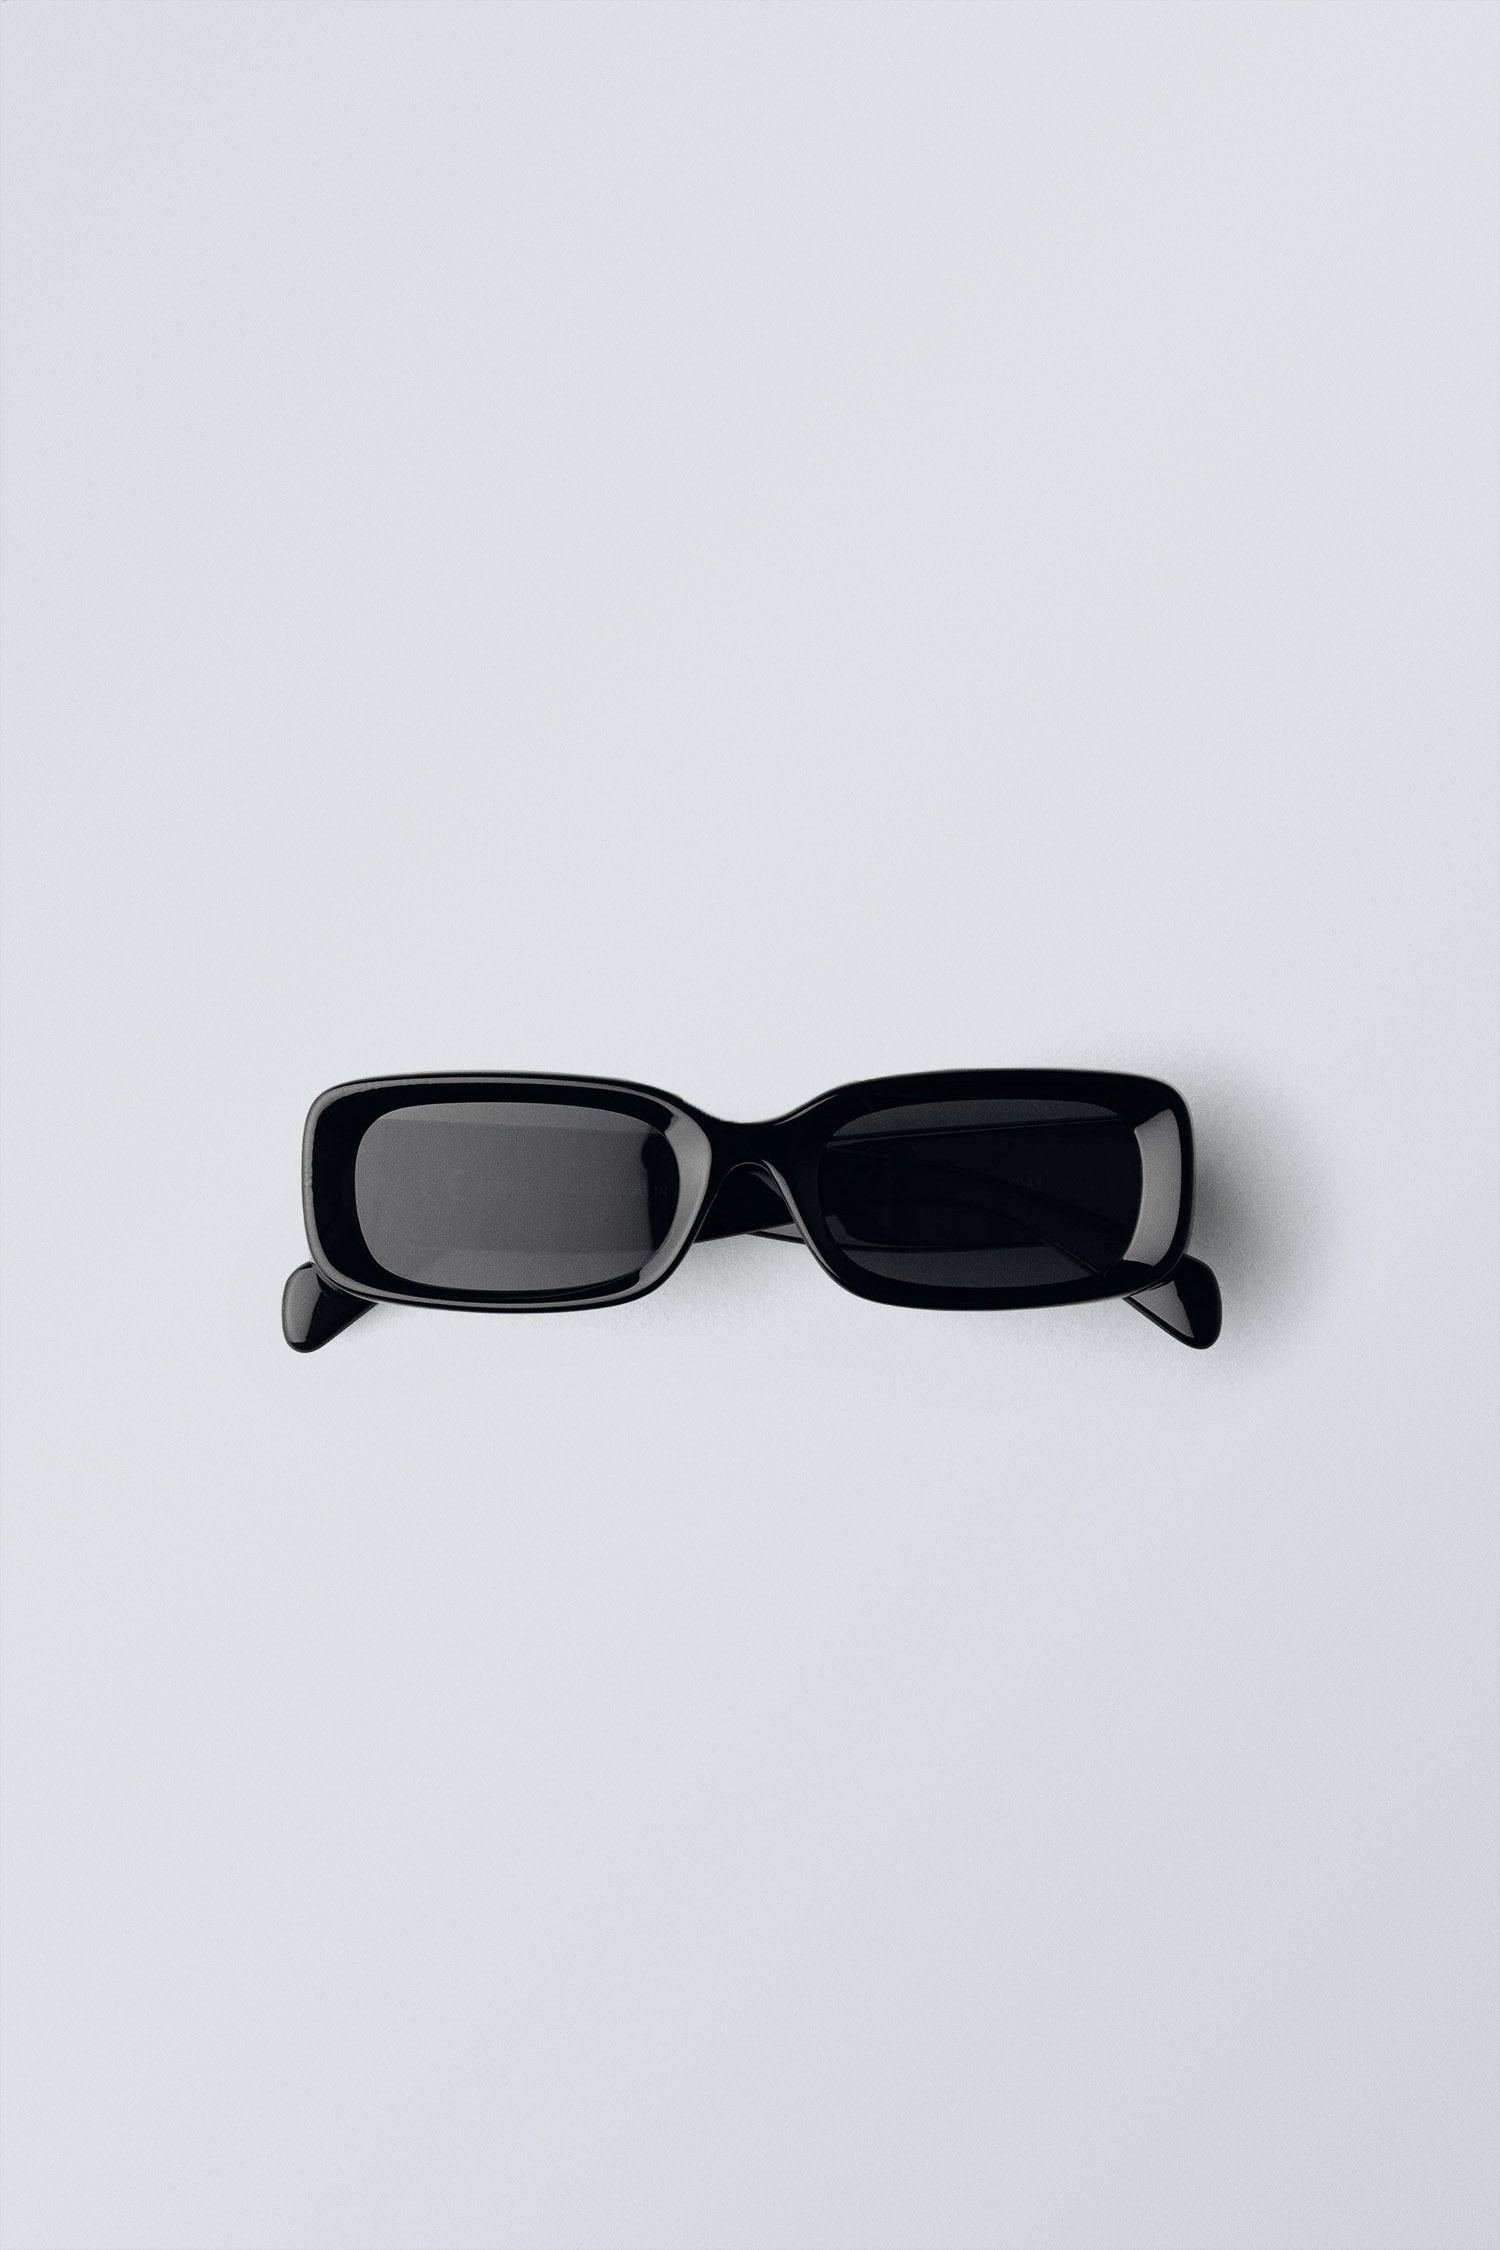 #272628 - Cruise Squared Sunglasses - 1